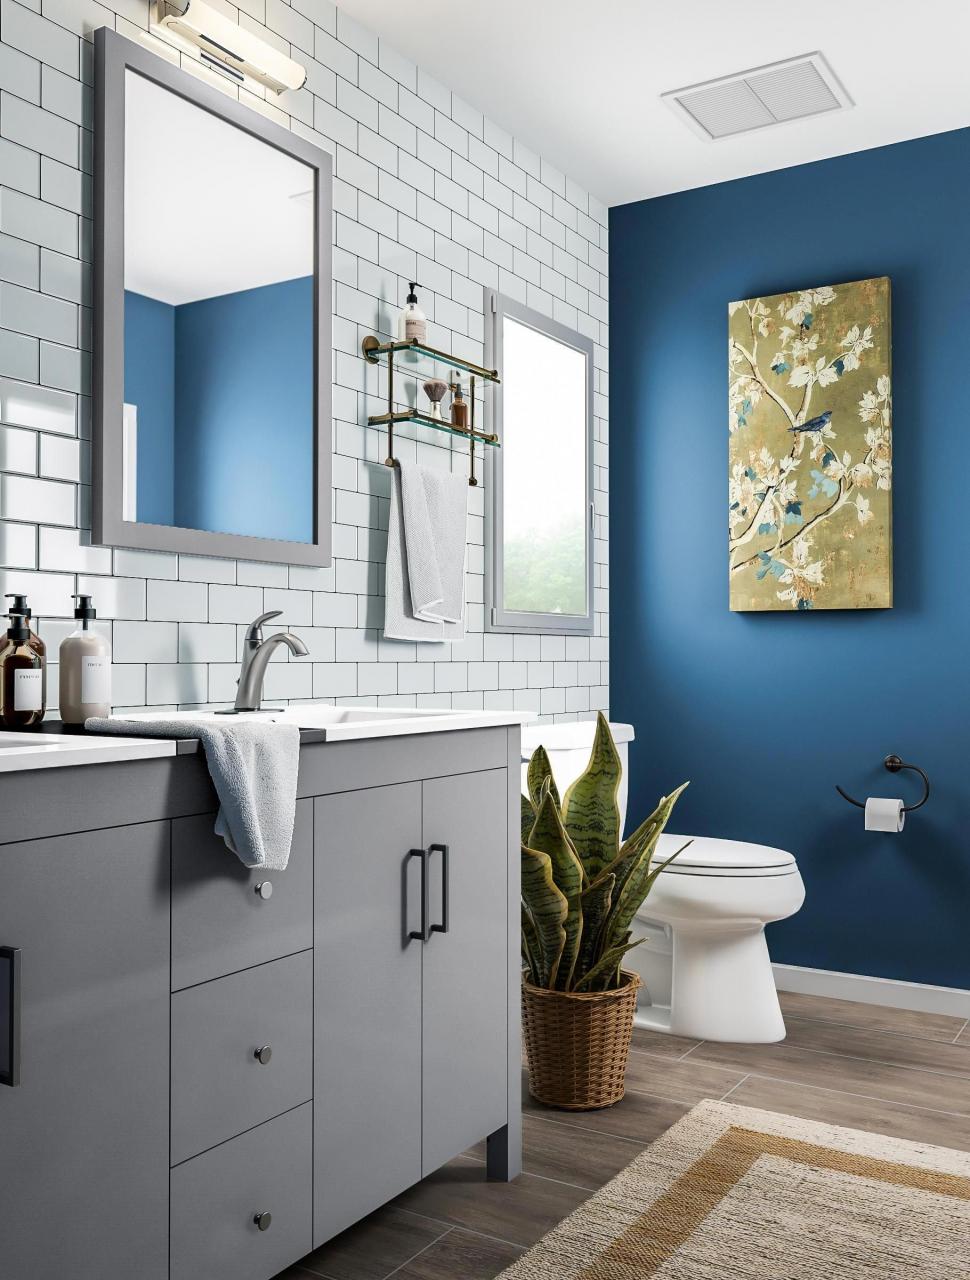 Give your bathroom a cosmopolitan edge. Stylish elements like a subway